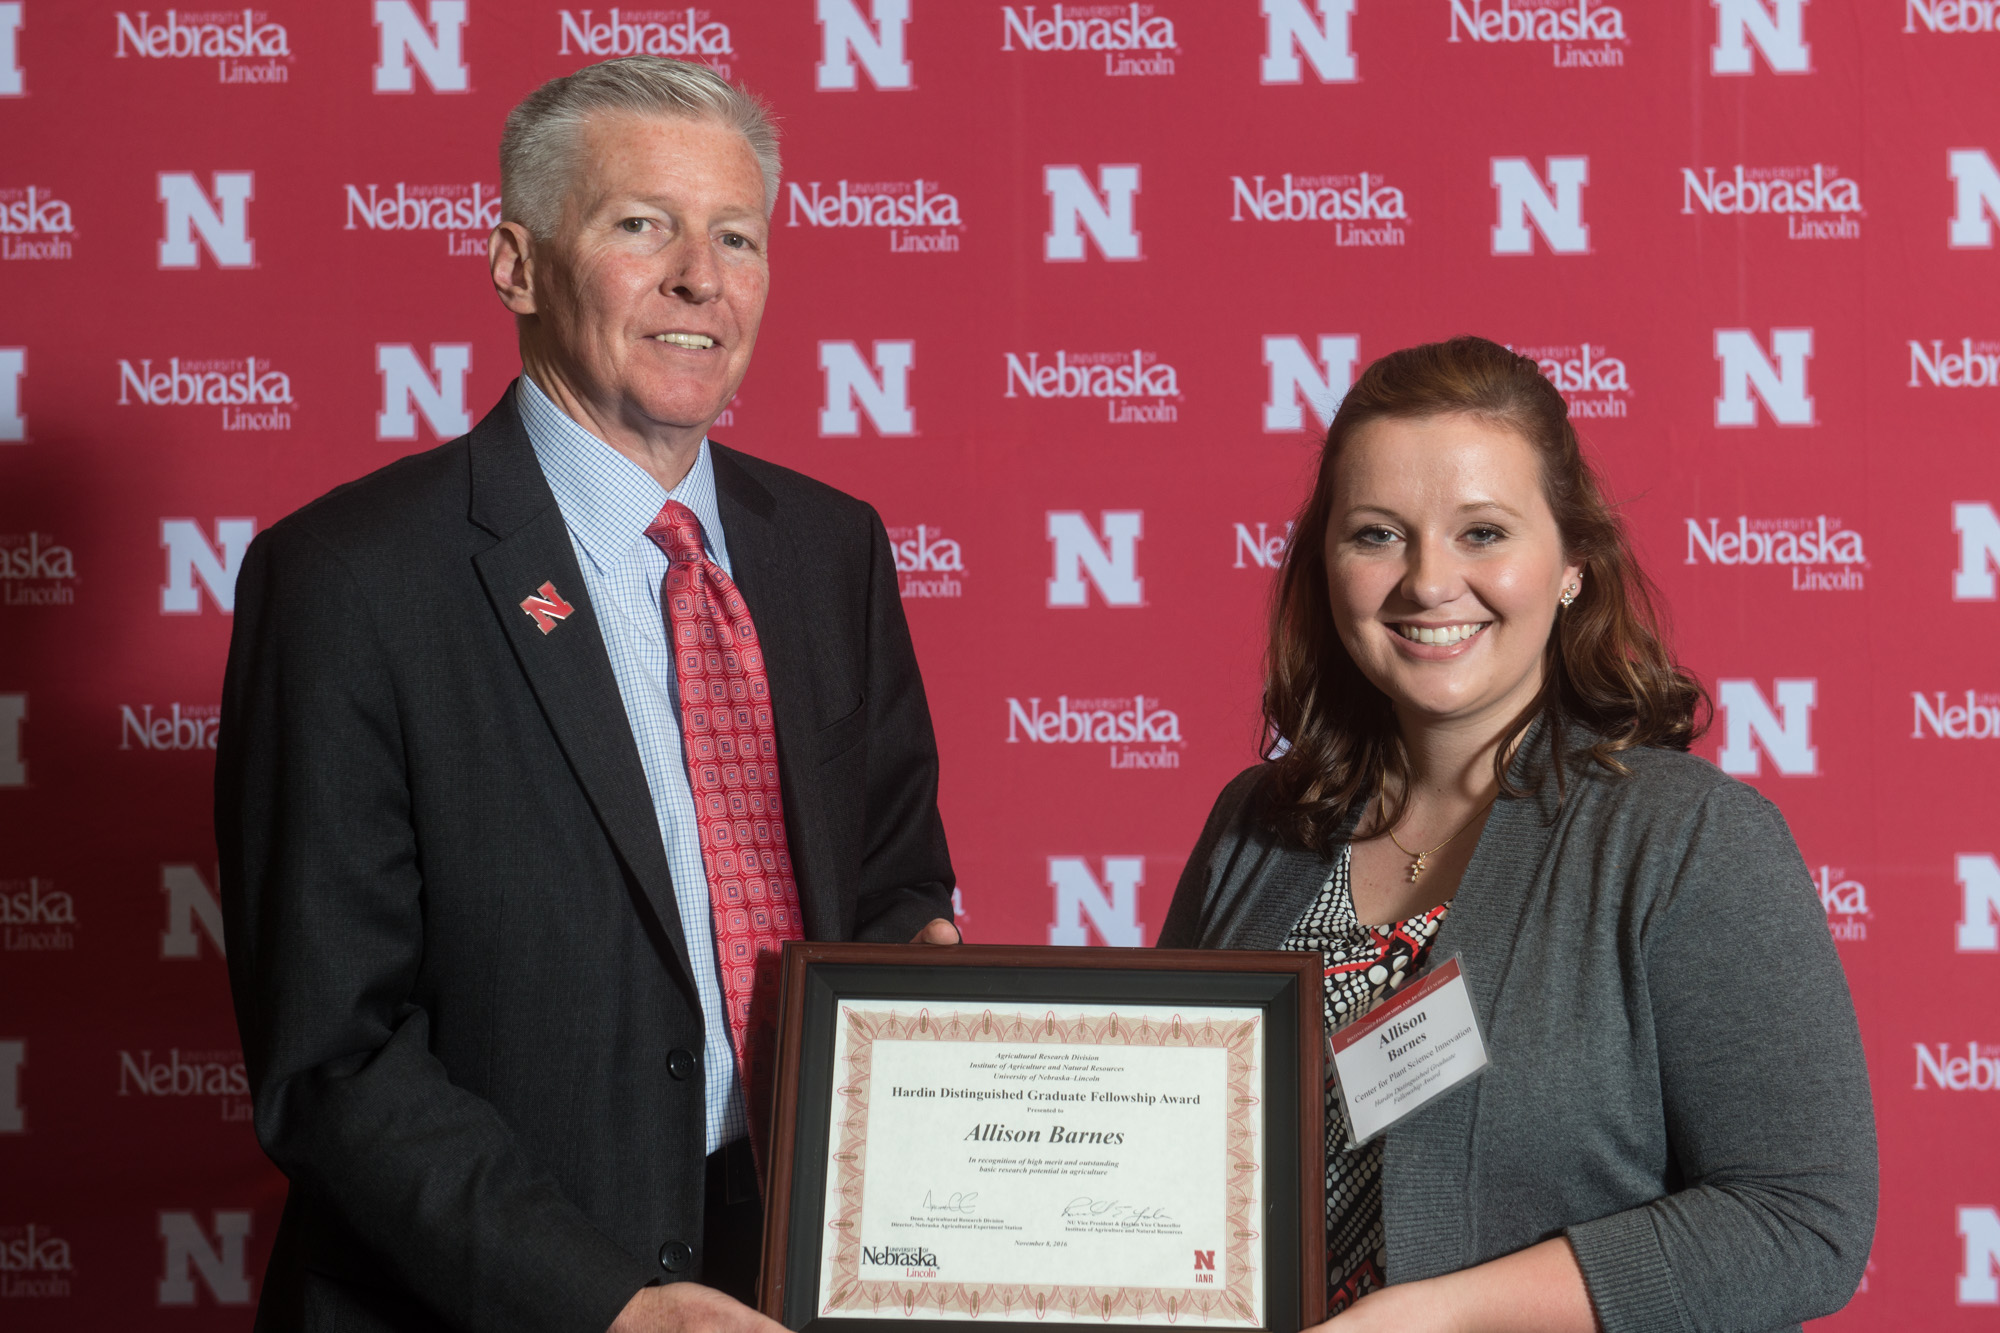 Allison Barnes Receives Hardin Distinguished Graduate Fellowship Award